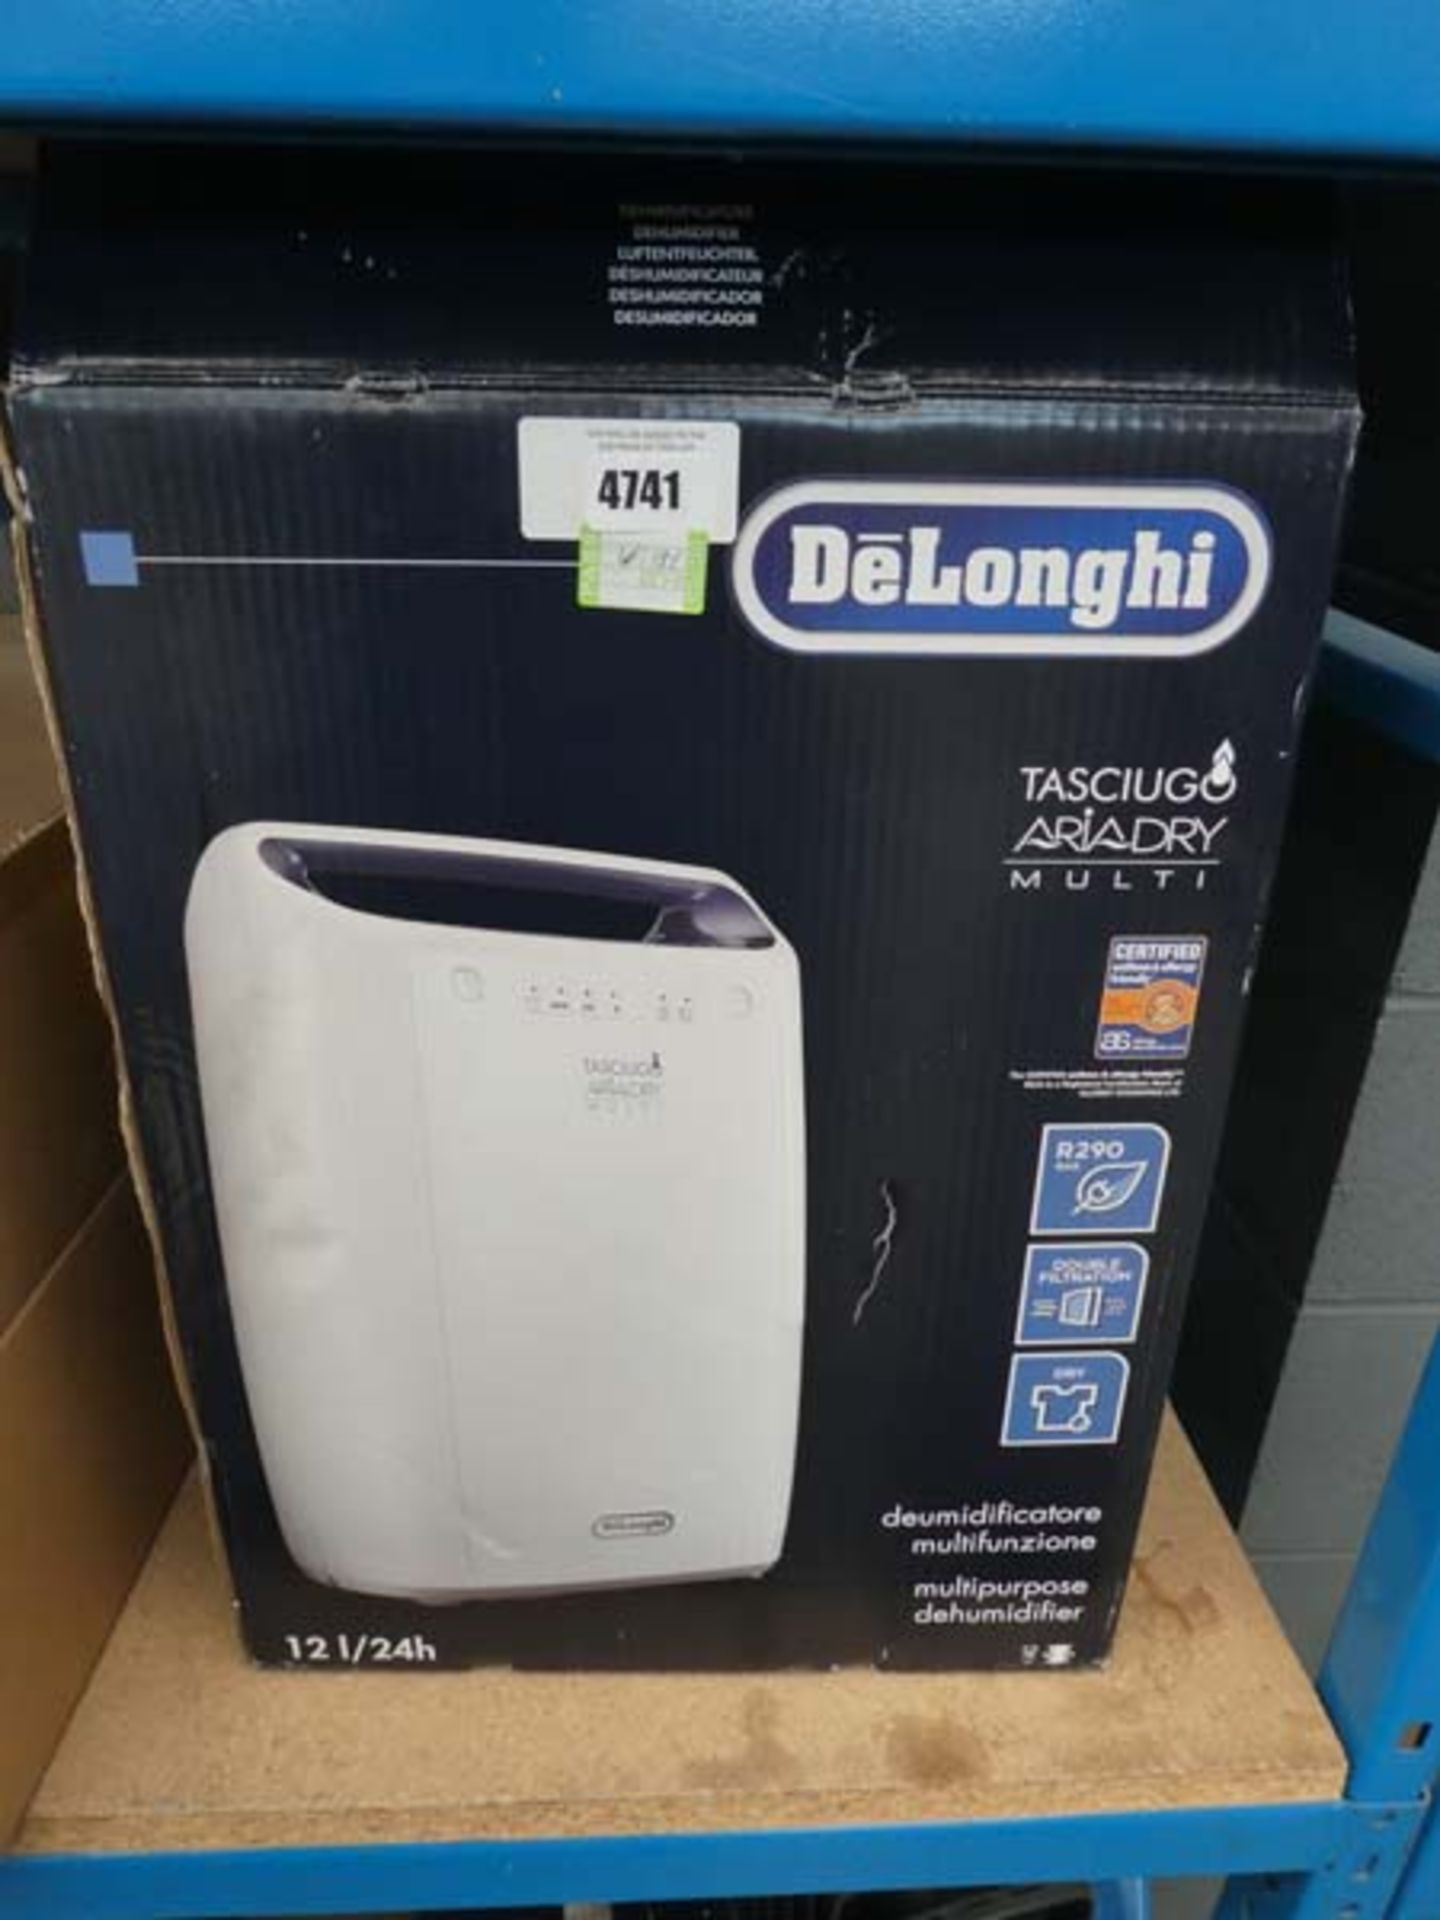 4679 - Boxed DeLonghi dehumidifier